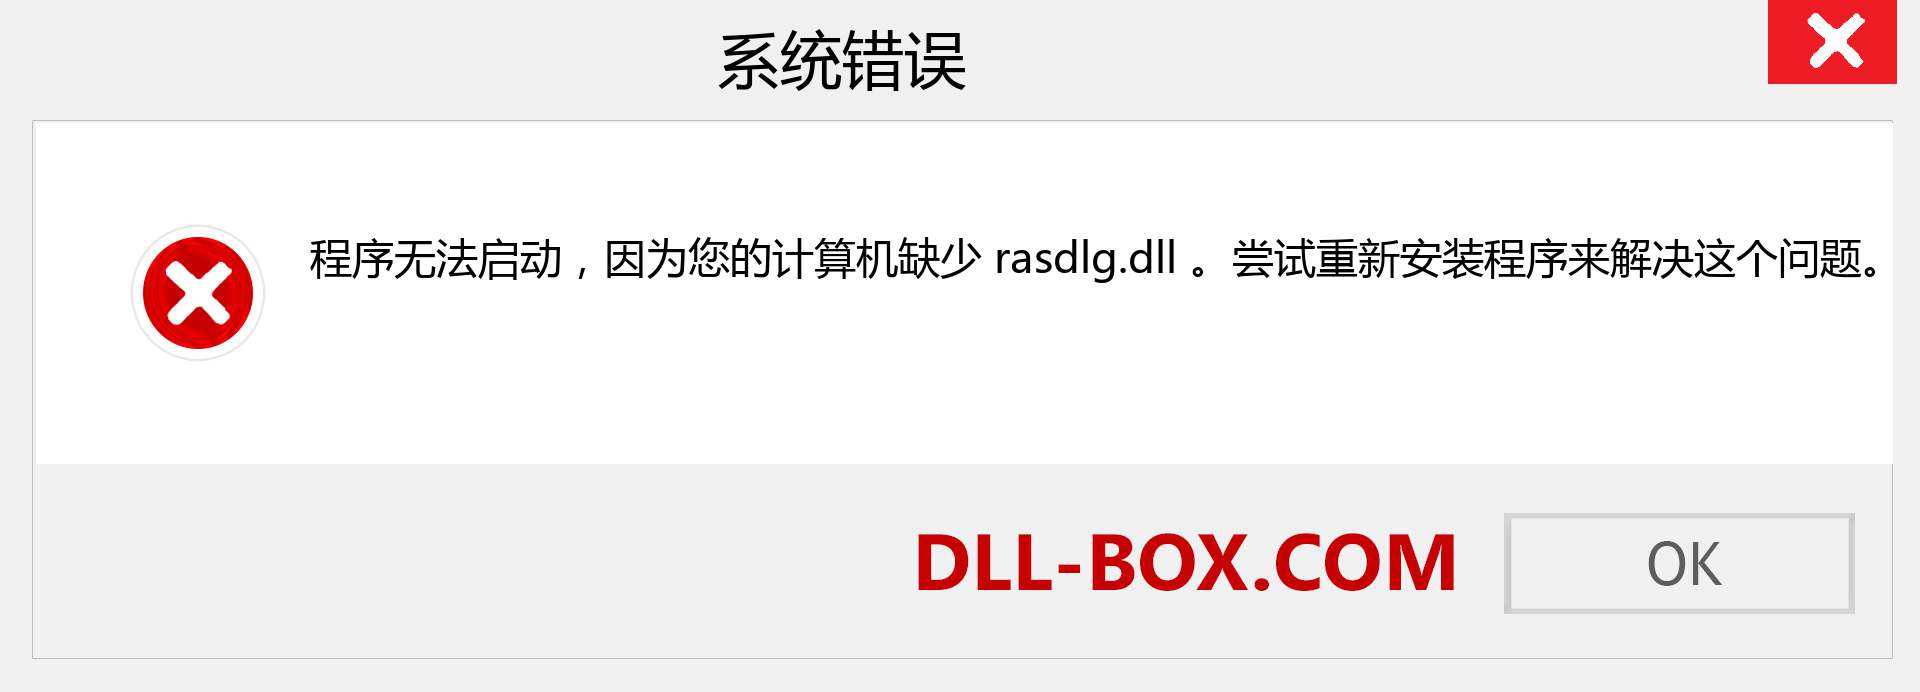 rasdlg.dll 文件丢失？。 适用于 Windows 7、8、10 的下载 - 修复 Windows、照片、图像上的 rasdlg dll 丢失错误